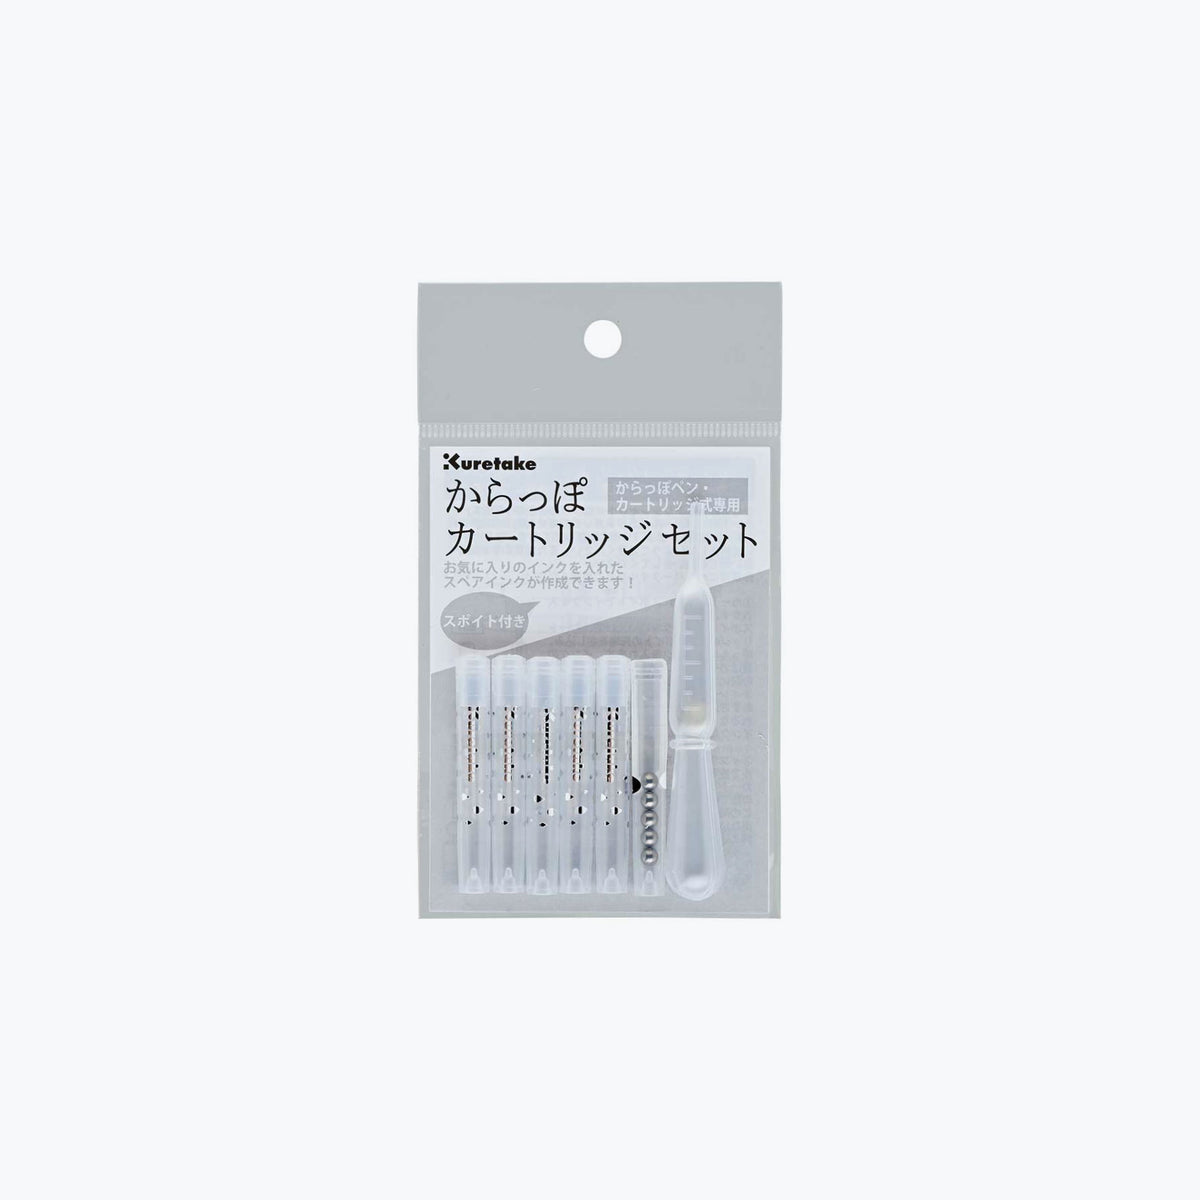 Kuretake - Karappo-Pen (Cartridge) - Replacement Cartridges <Outgoing>